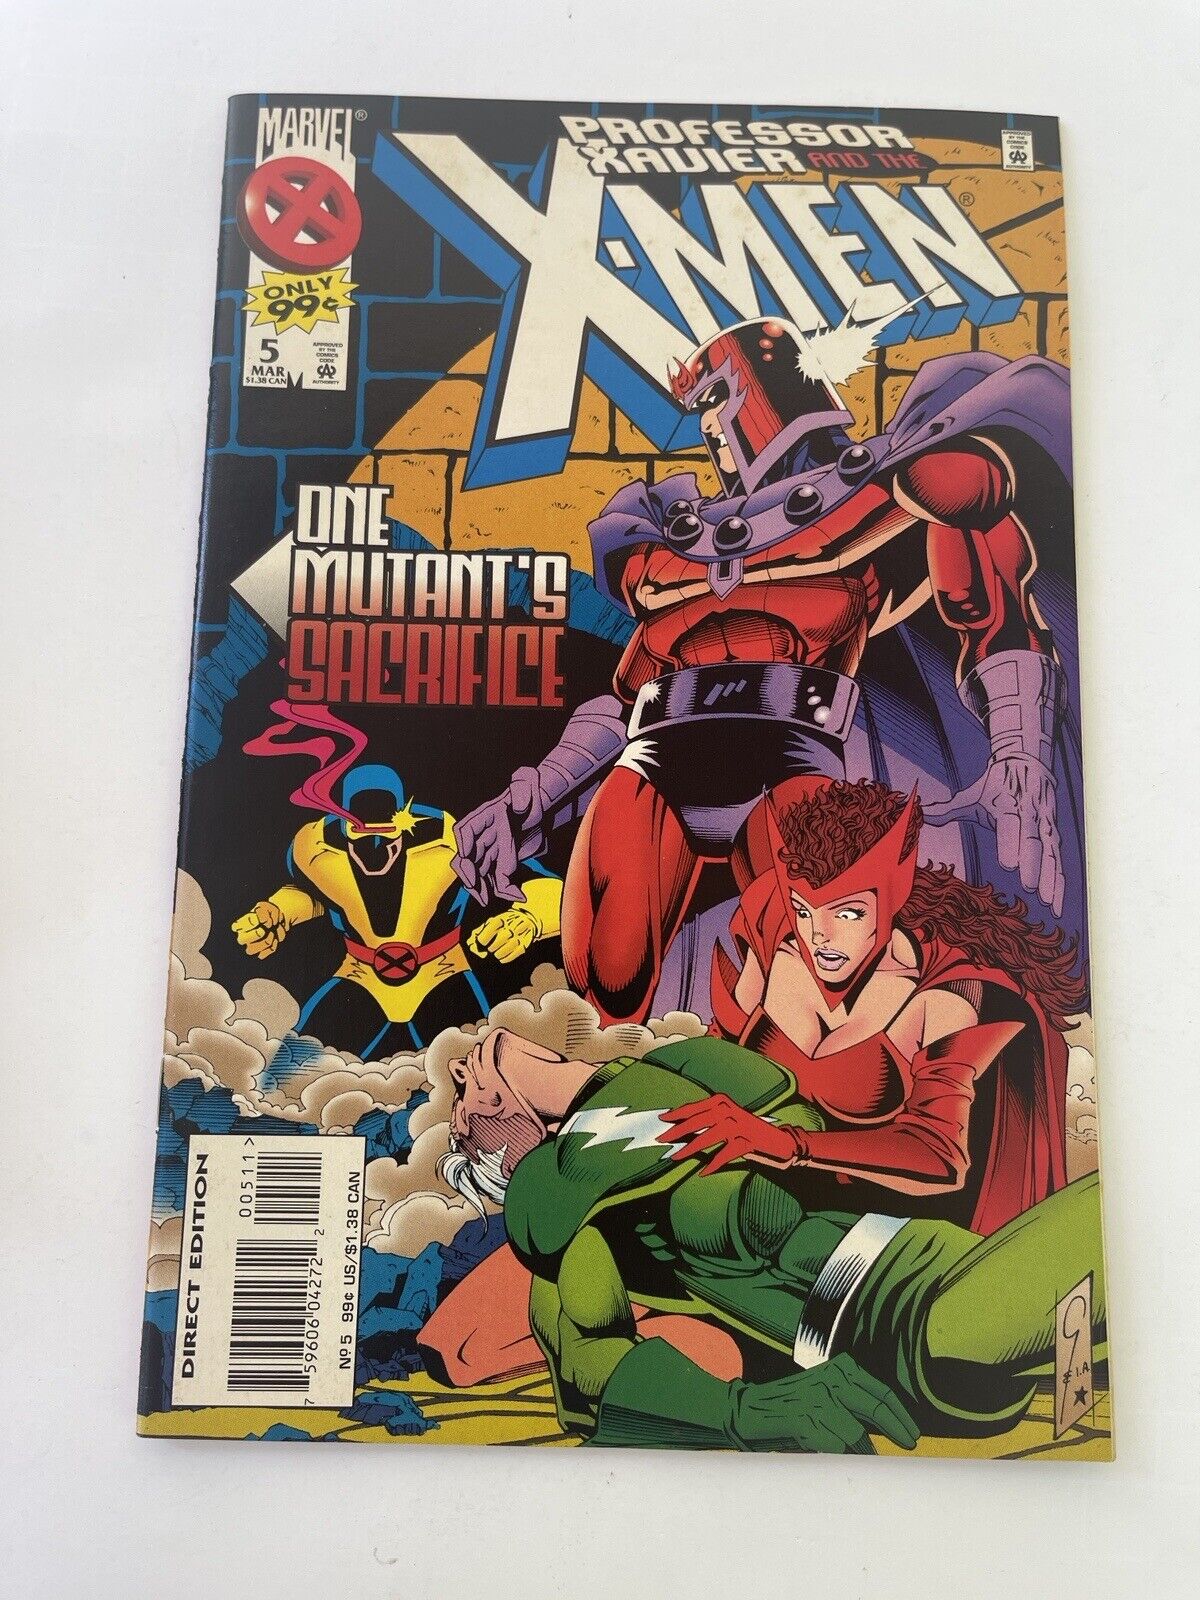 Marvel Comics Professor Xavier and the X-Men One Mutant's Sacrifice Vol 1 No 5 